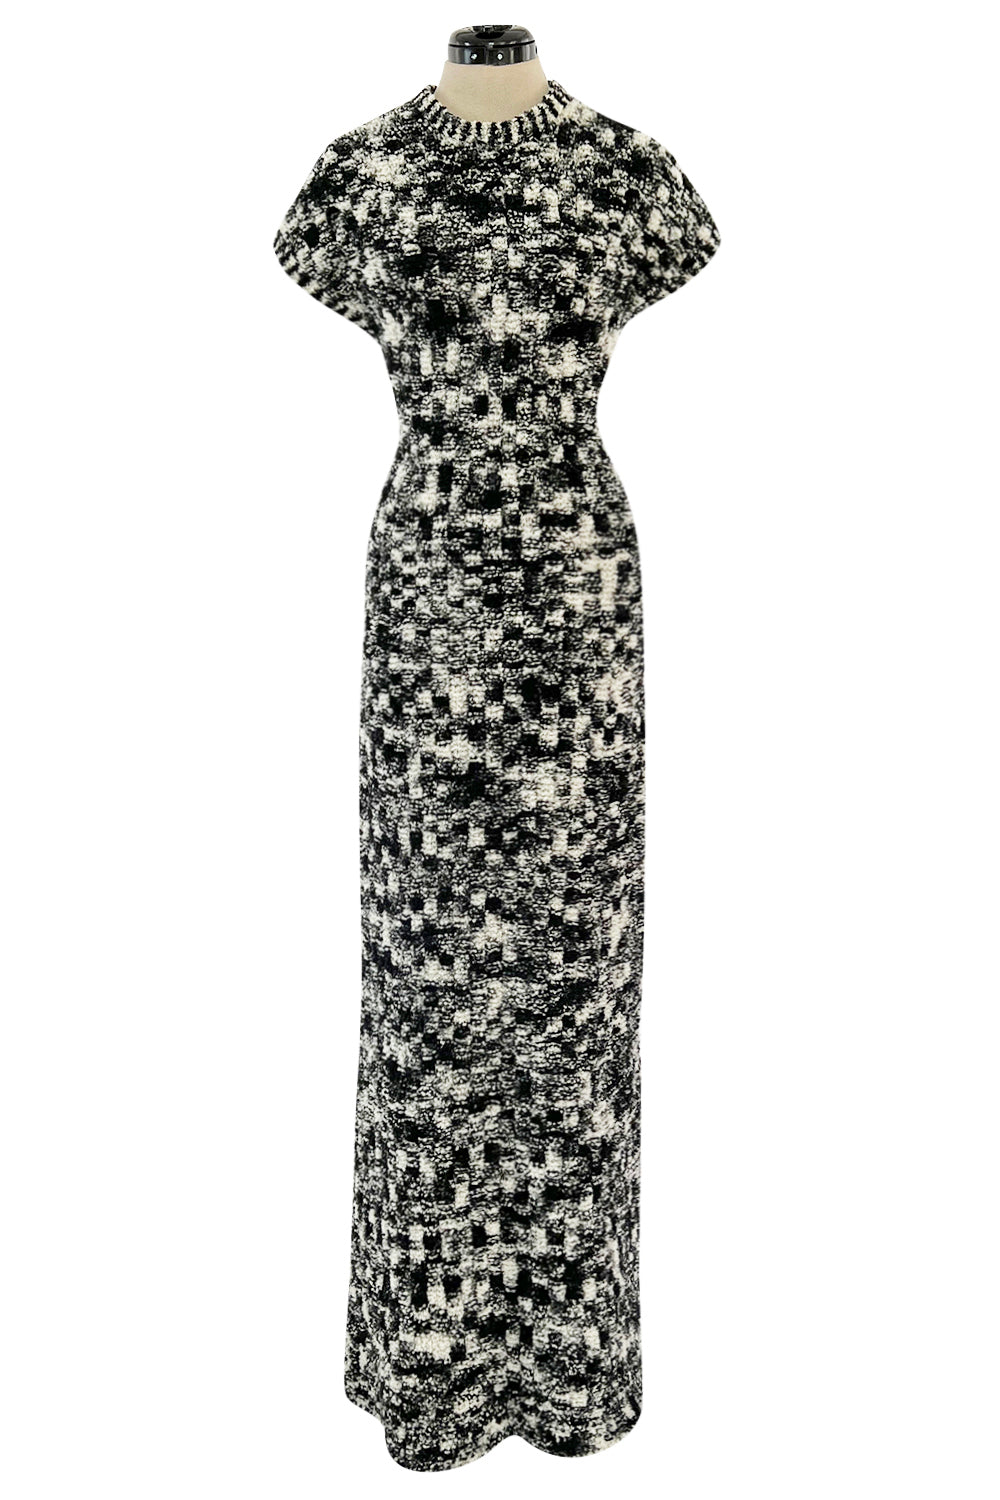 Karl Lagerfeld Paris Sleeveless Bow Black and White Dress, size 0 / small